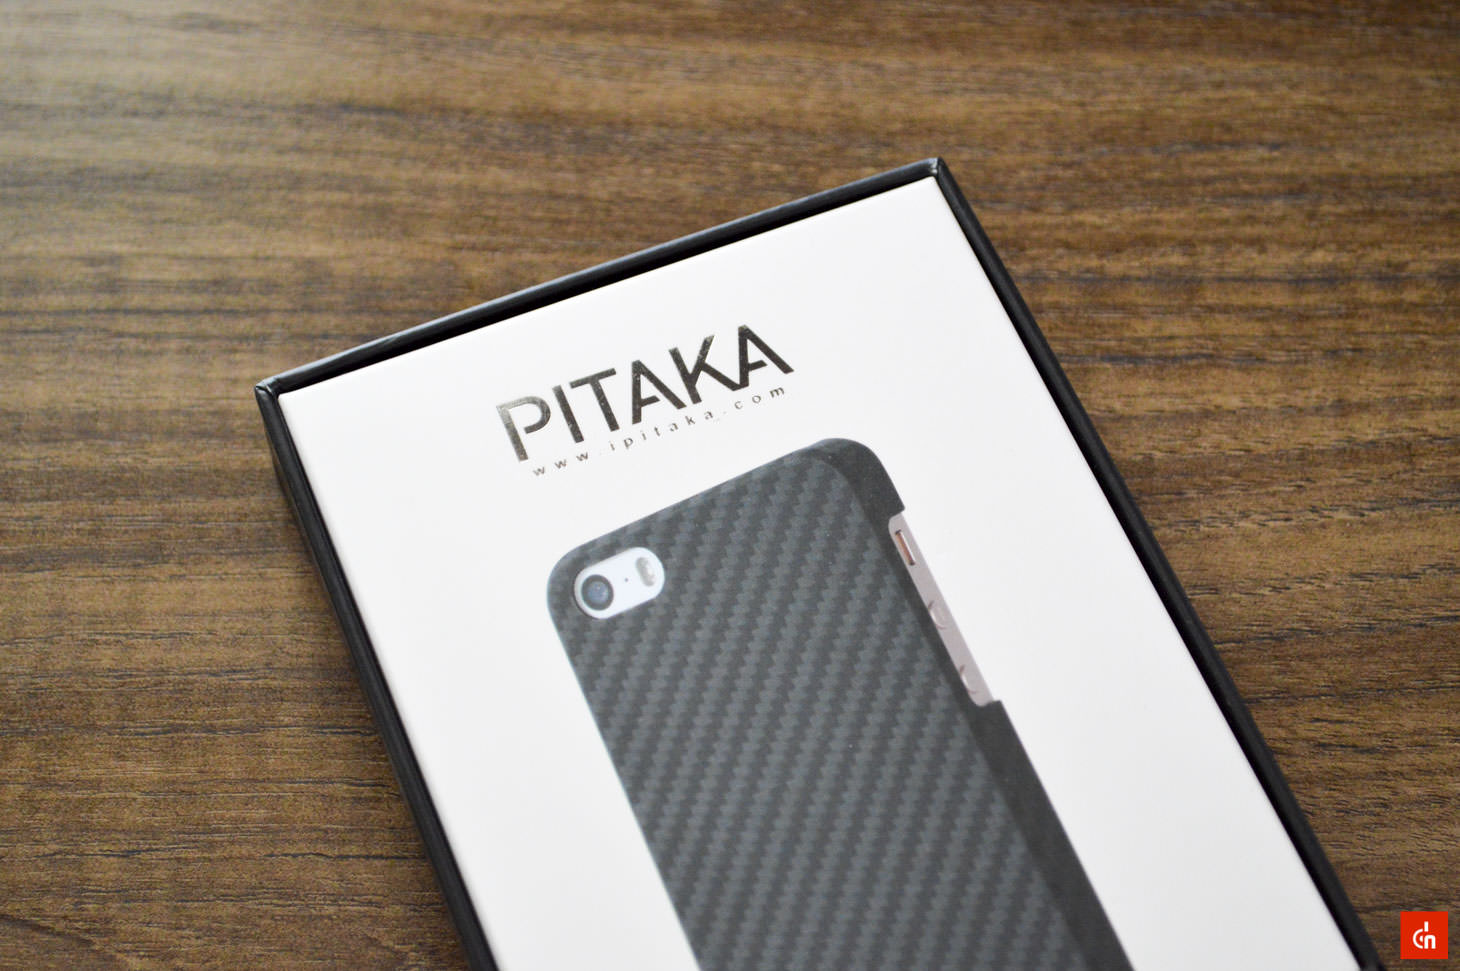 001_20160717_pitaka-carbon-iphonese-case